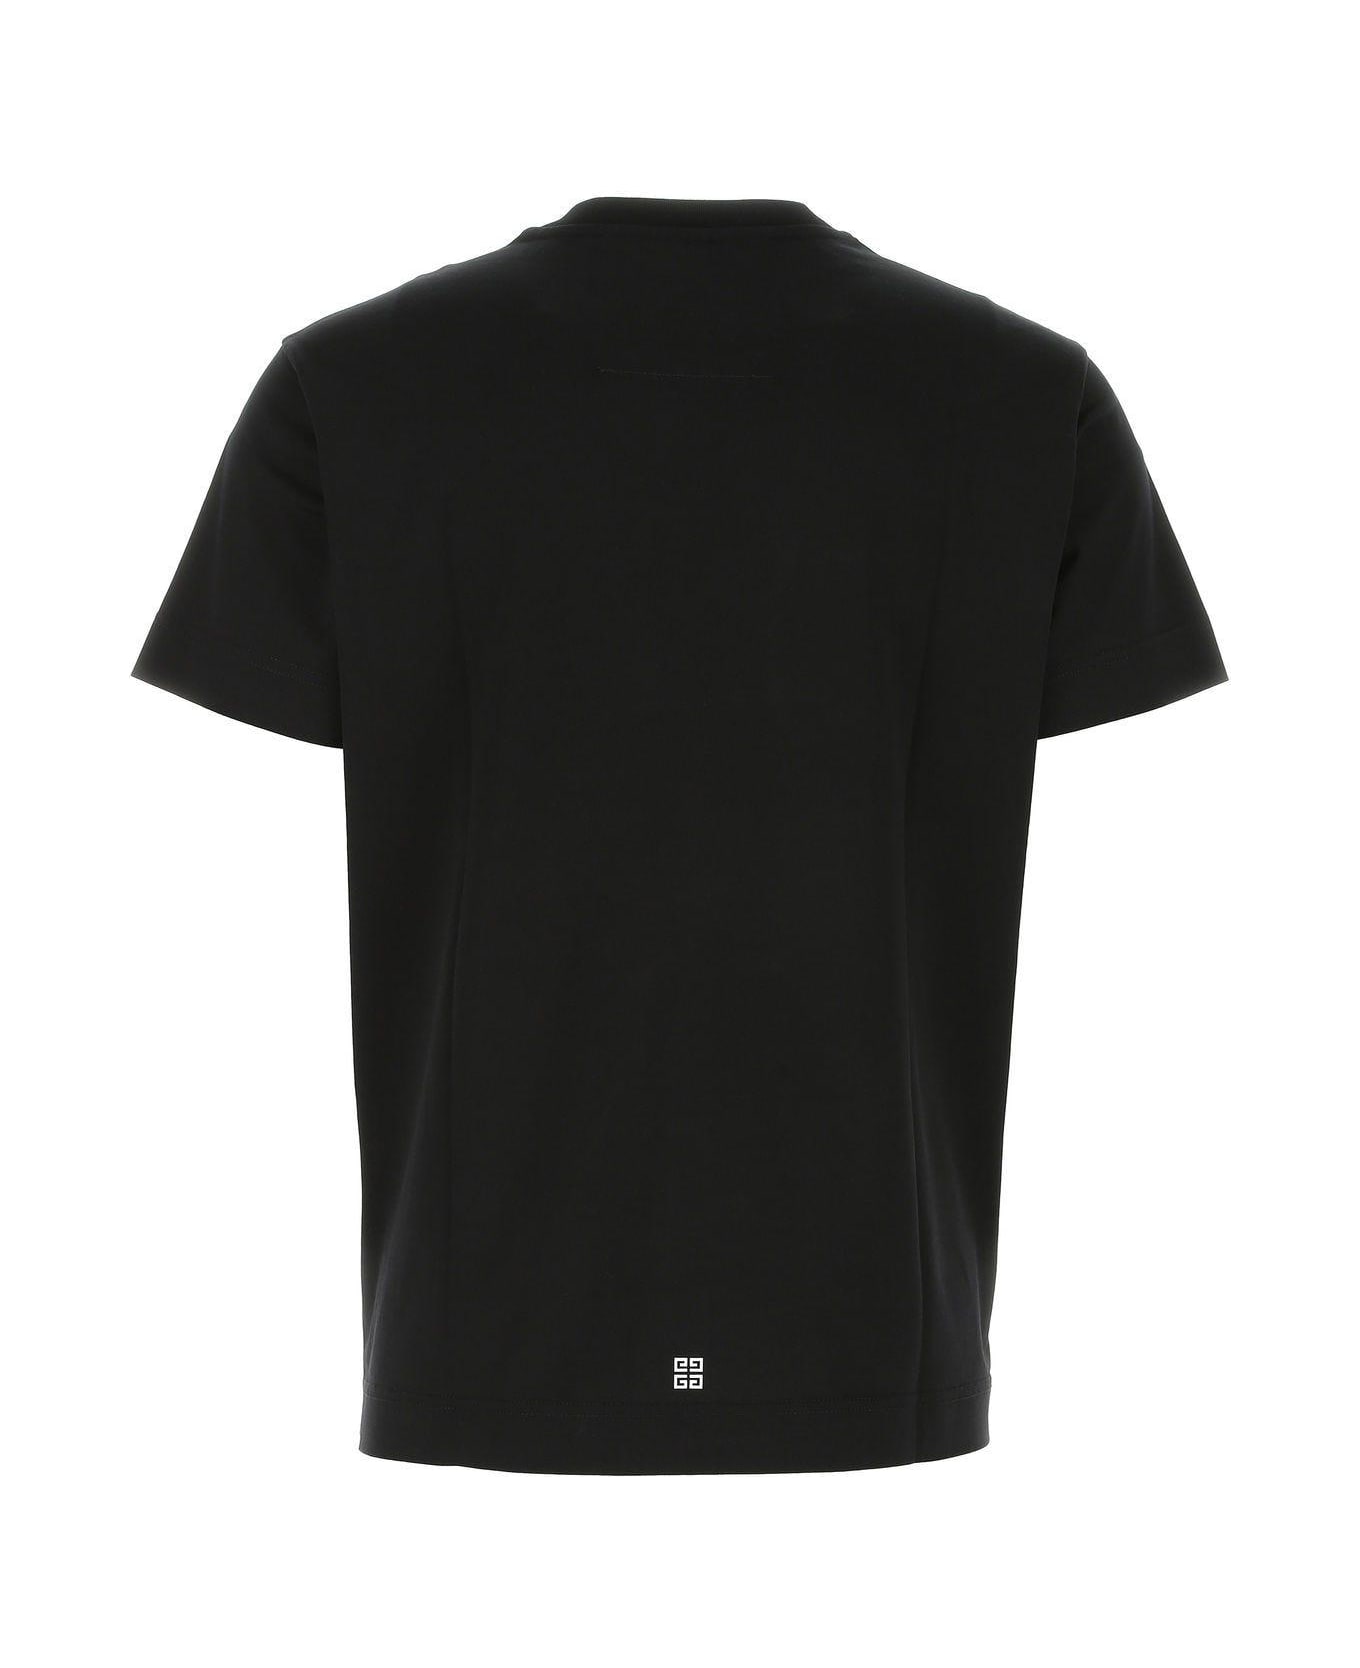 Givenchy Black Cotton T-shirt - Black